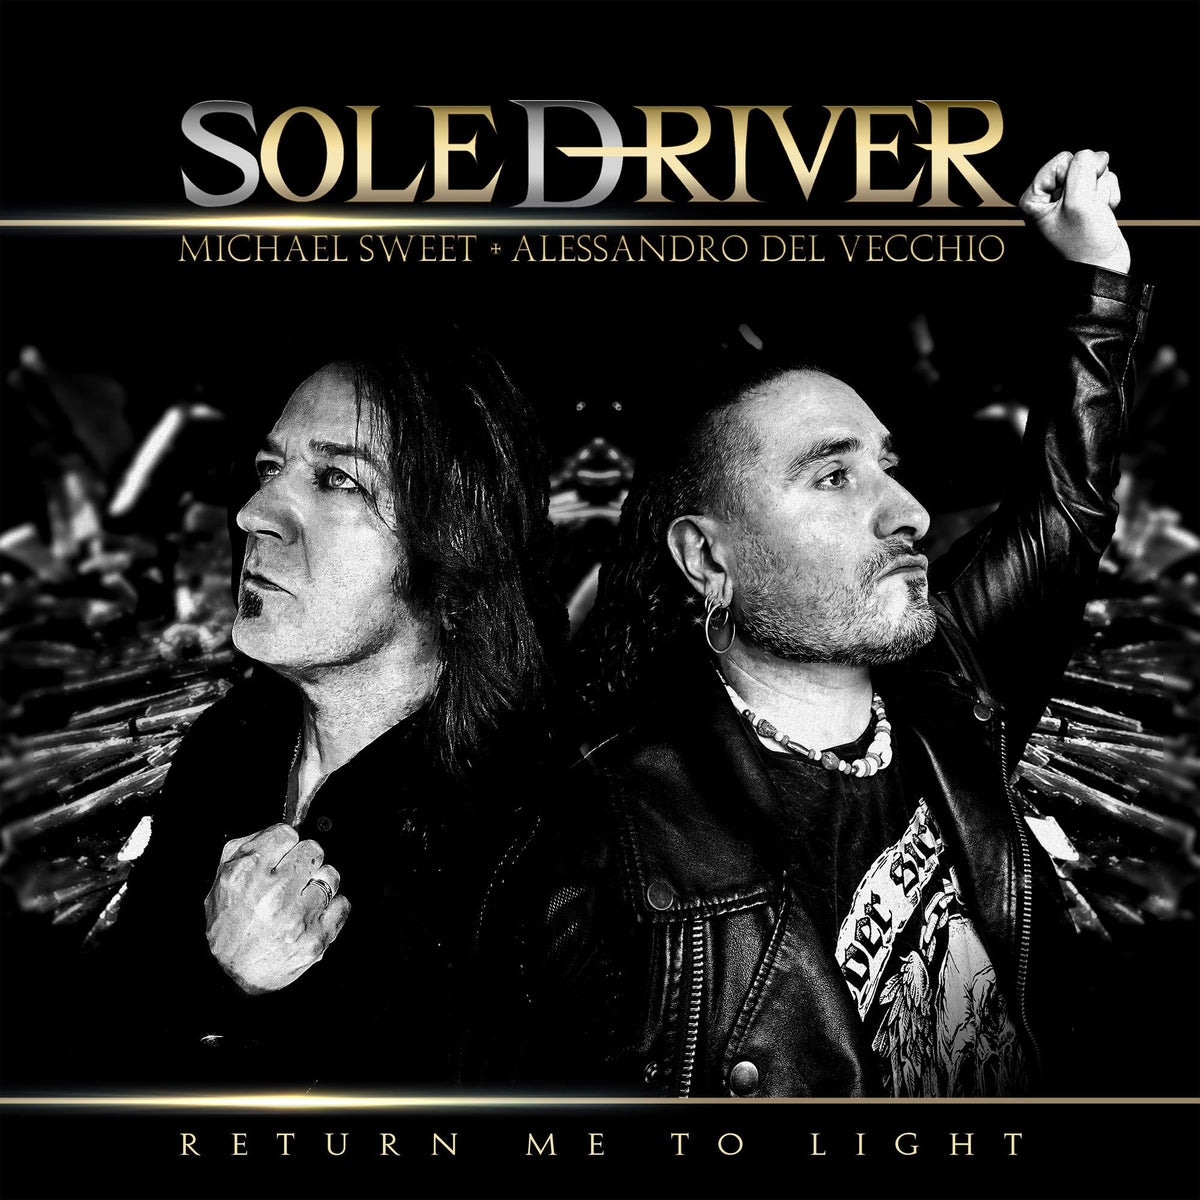 – EU To - - CD Me Frontiers Return Records SOLEDRIVER Srl Light